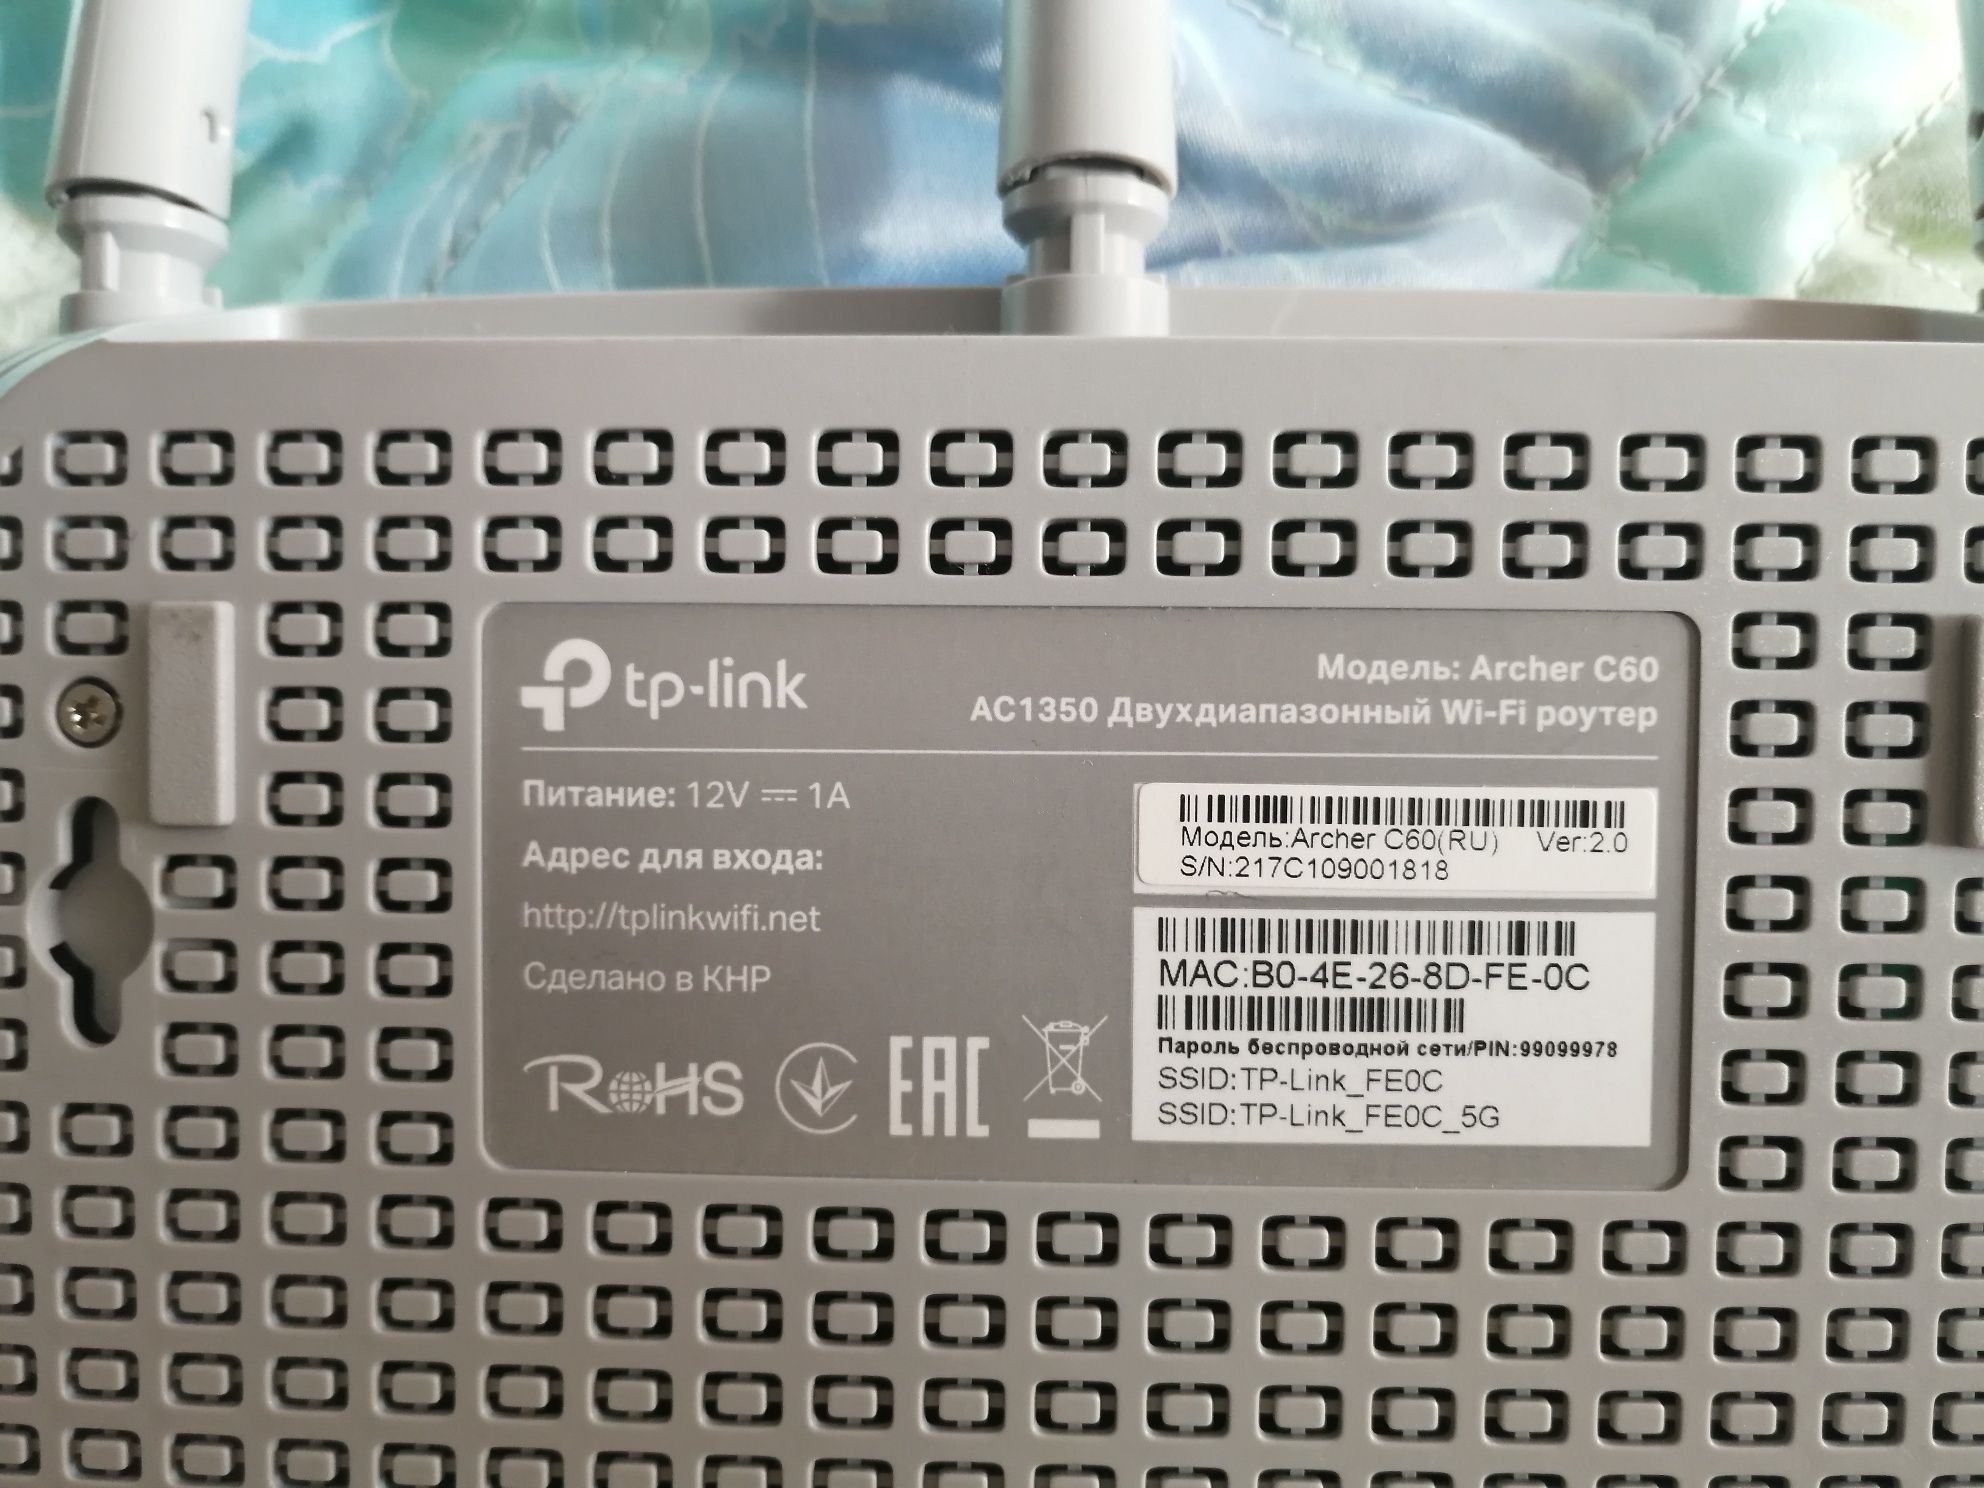 Wi-Fi роутер TP-LINK под ремонт